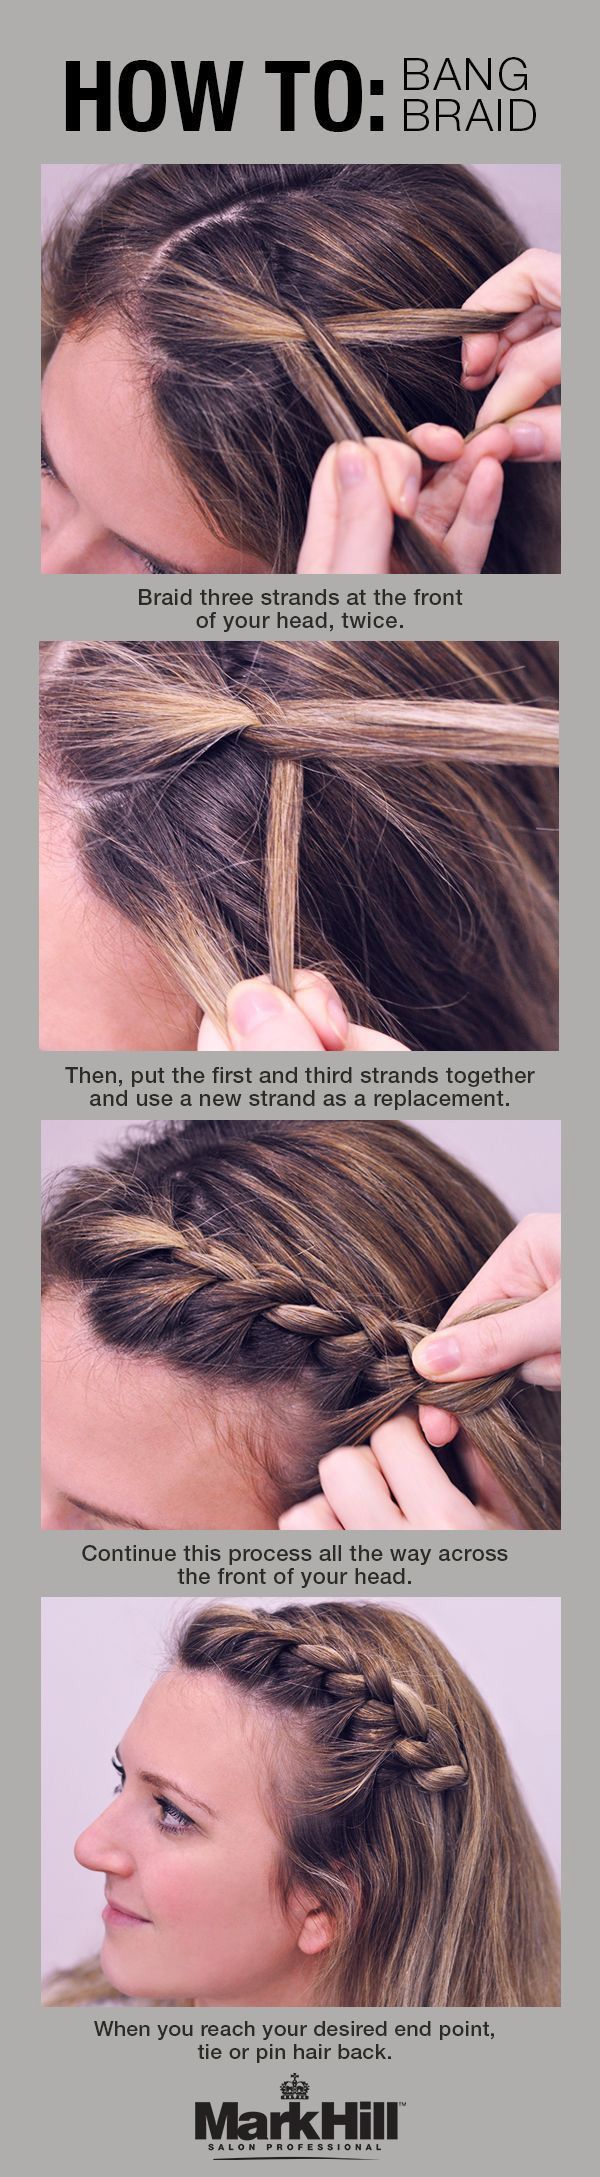 Braid Bang's hairstyle tutorial